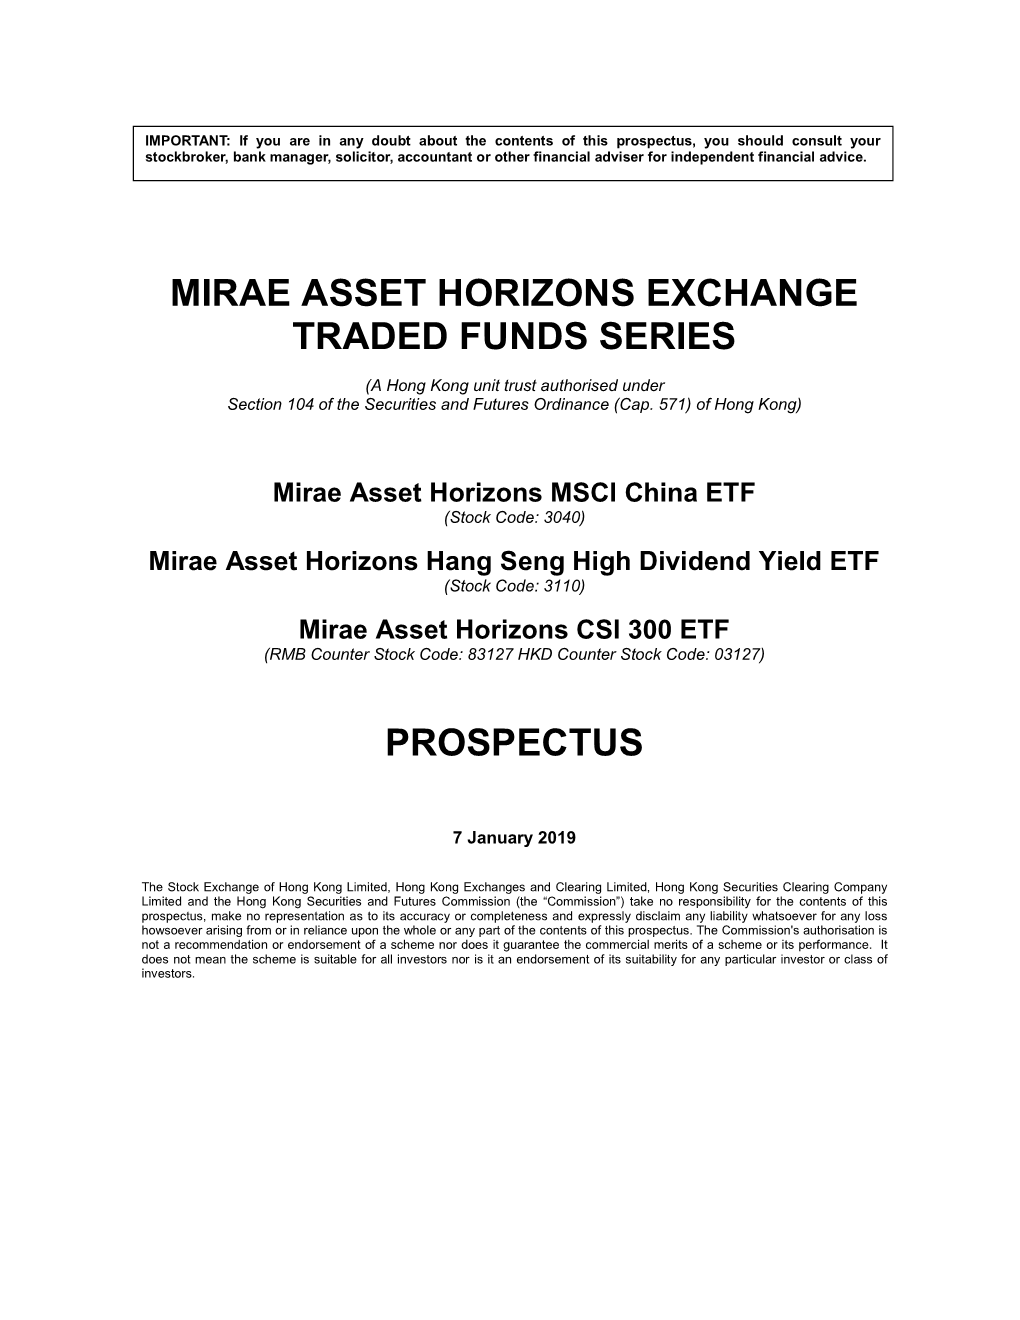 Mirae Asset Horizons Exchange Traded Funds Series